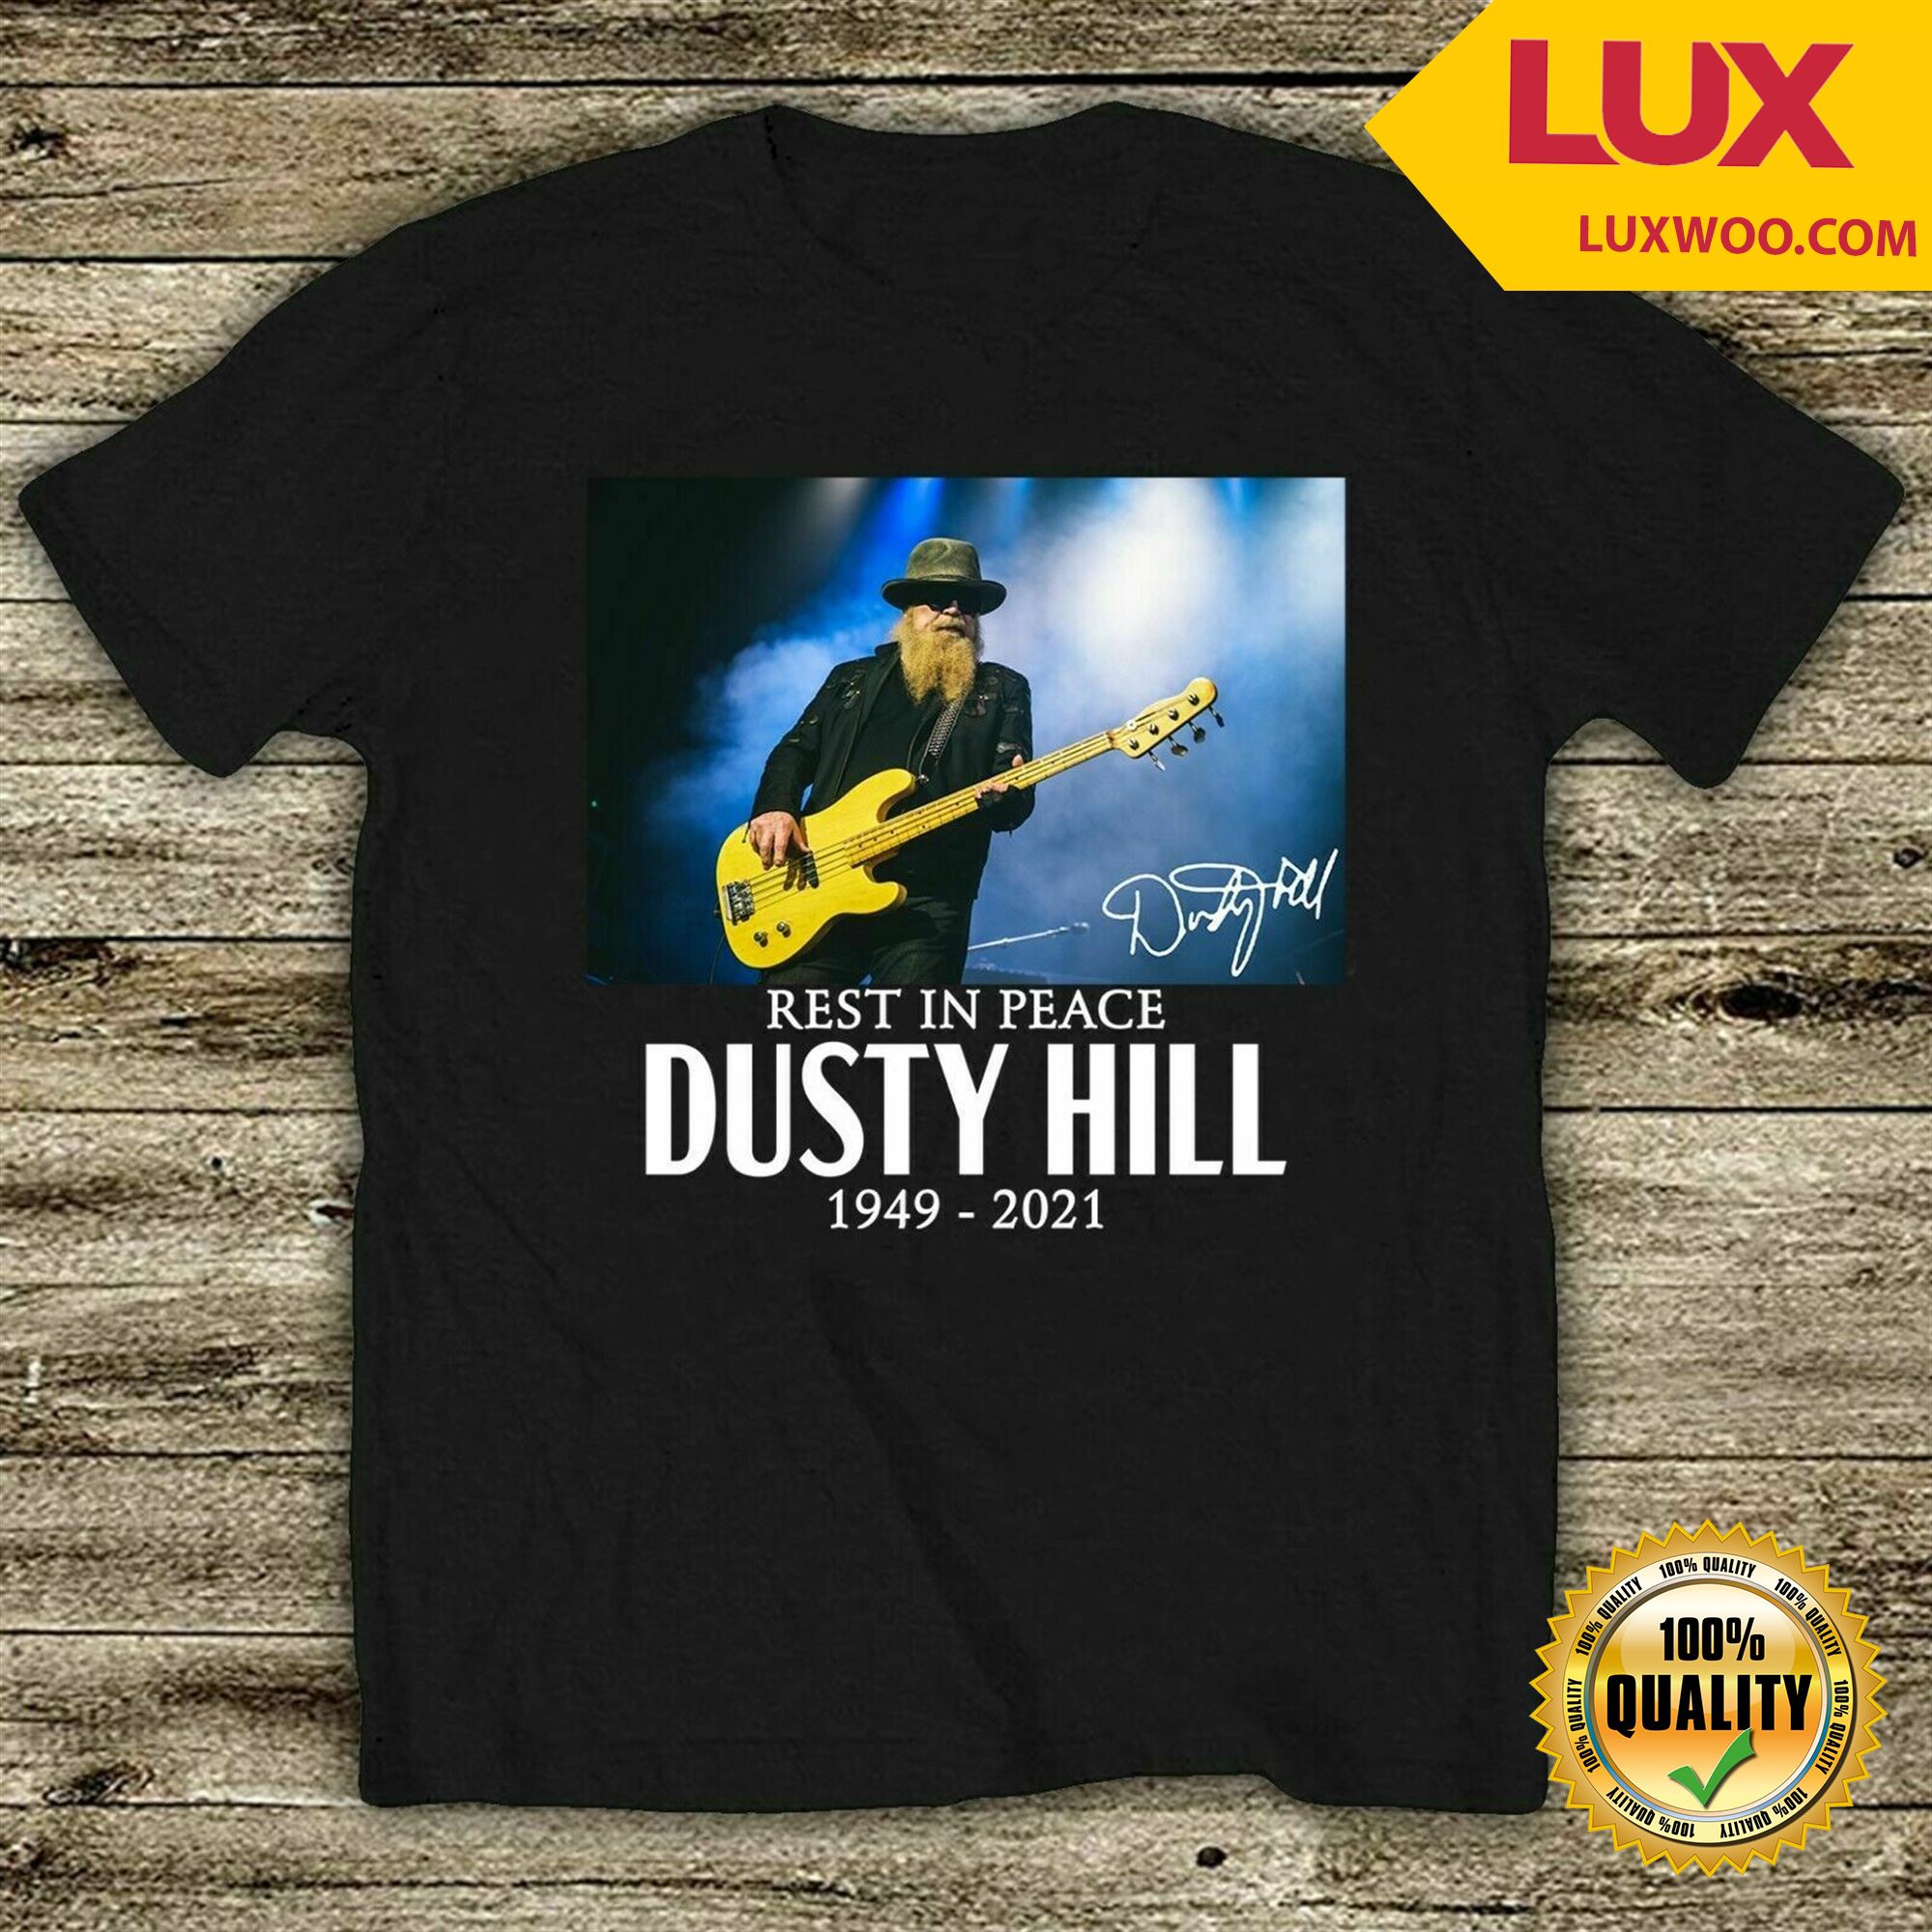 Rip Music Band Zz Top Bassist Dusty Hill 1949-2021 T-shirt